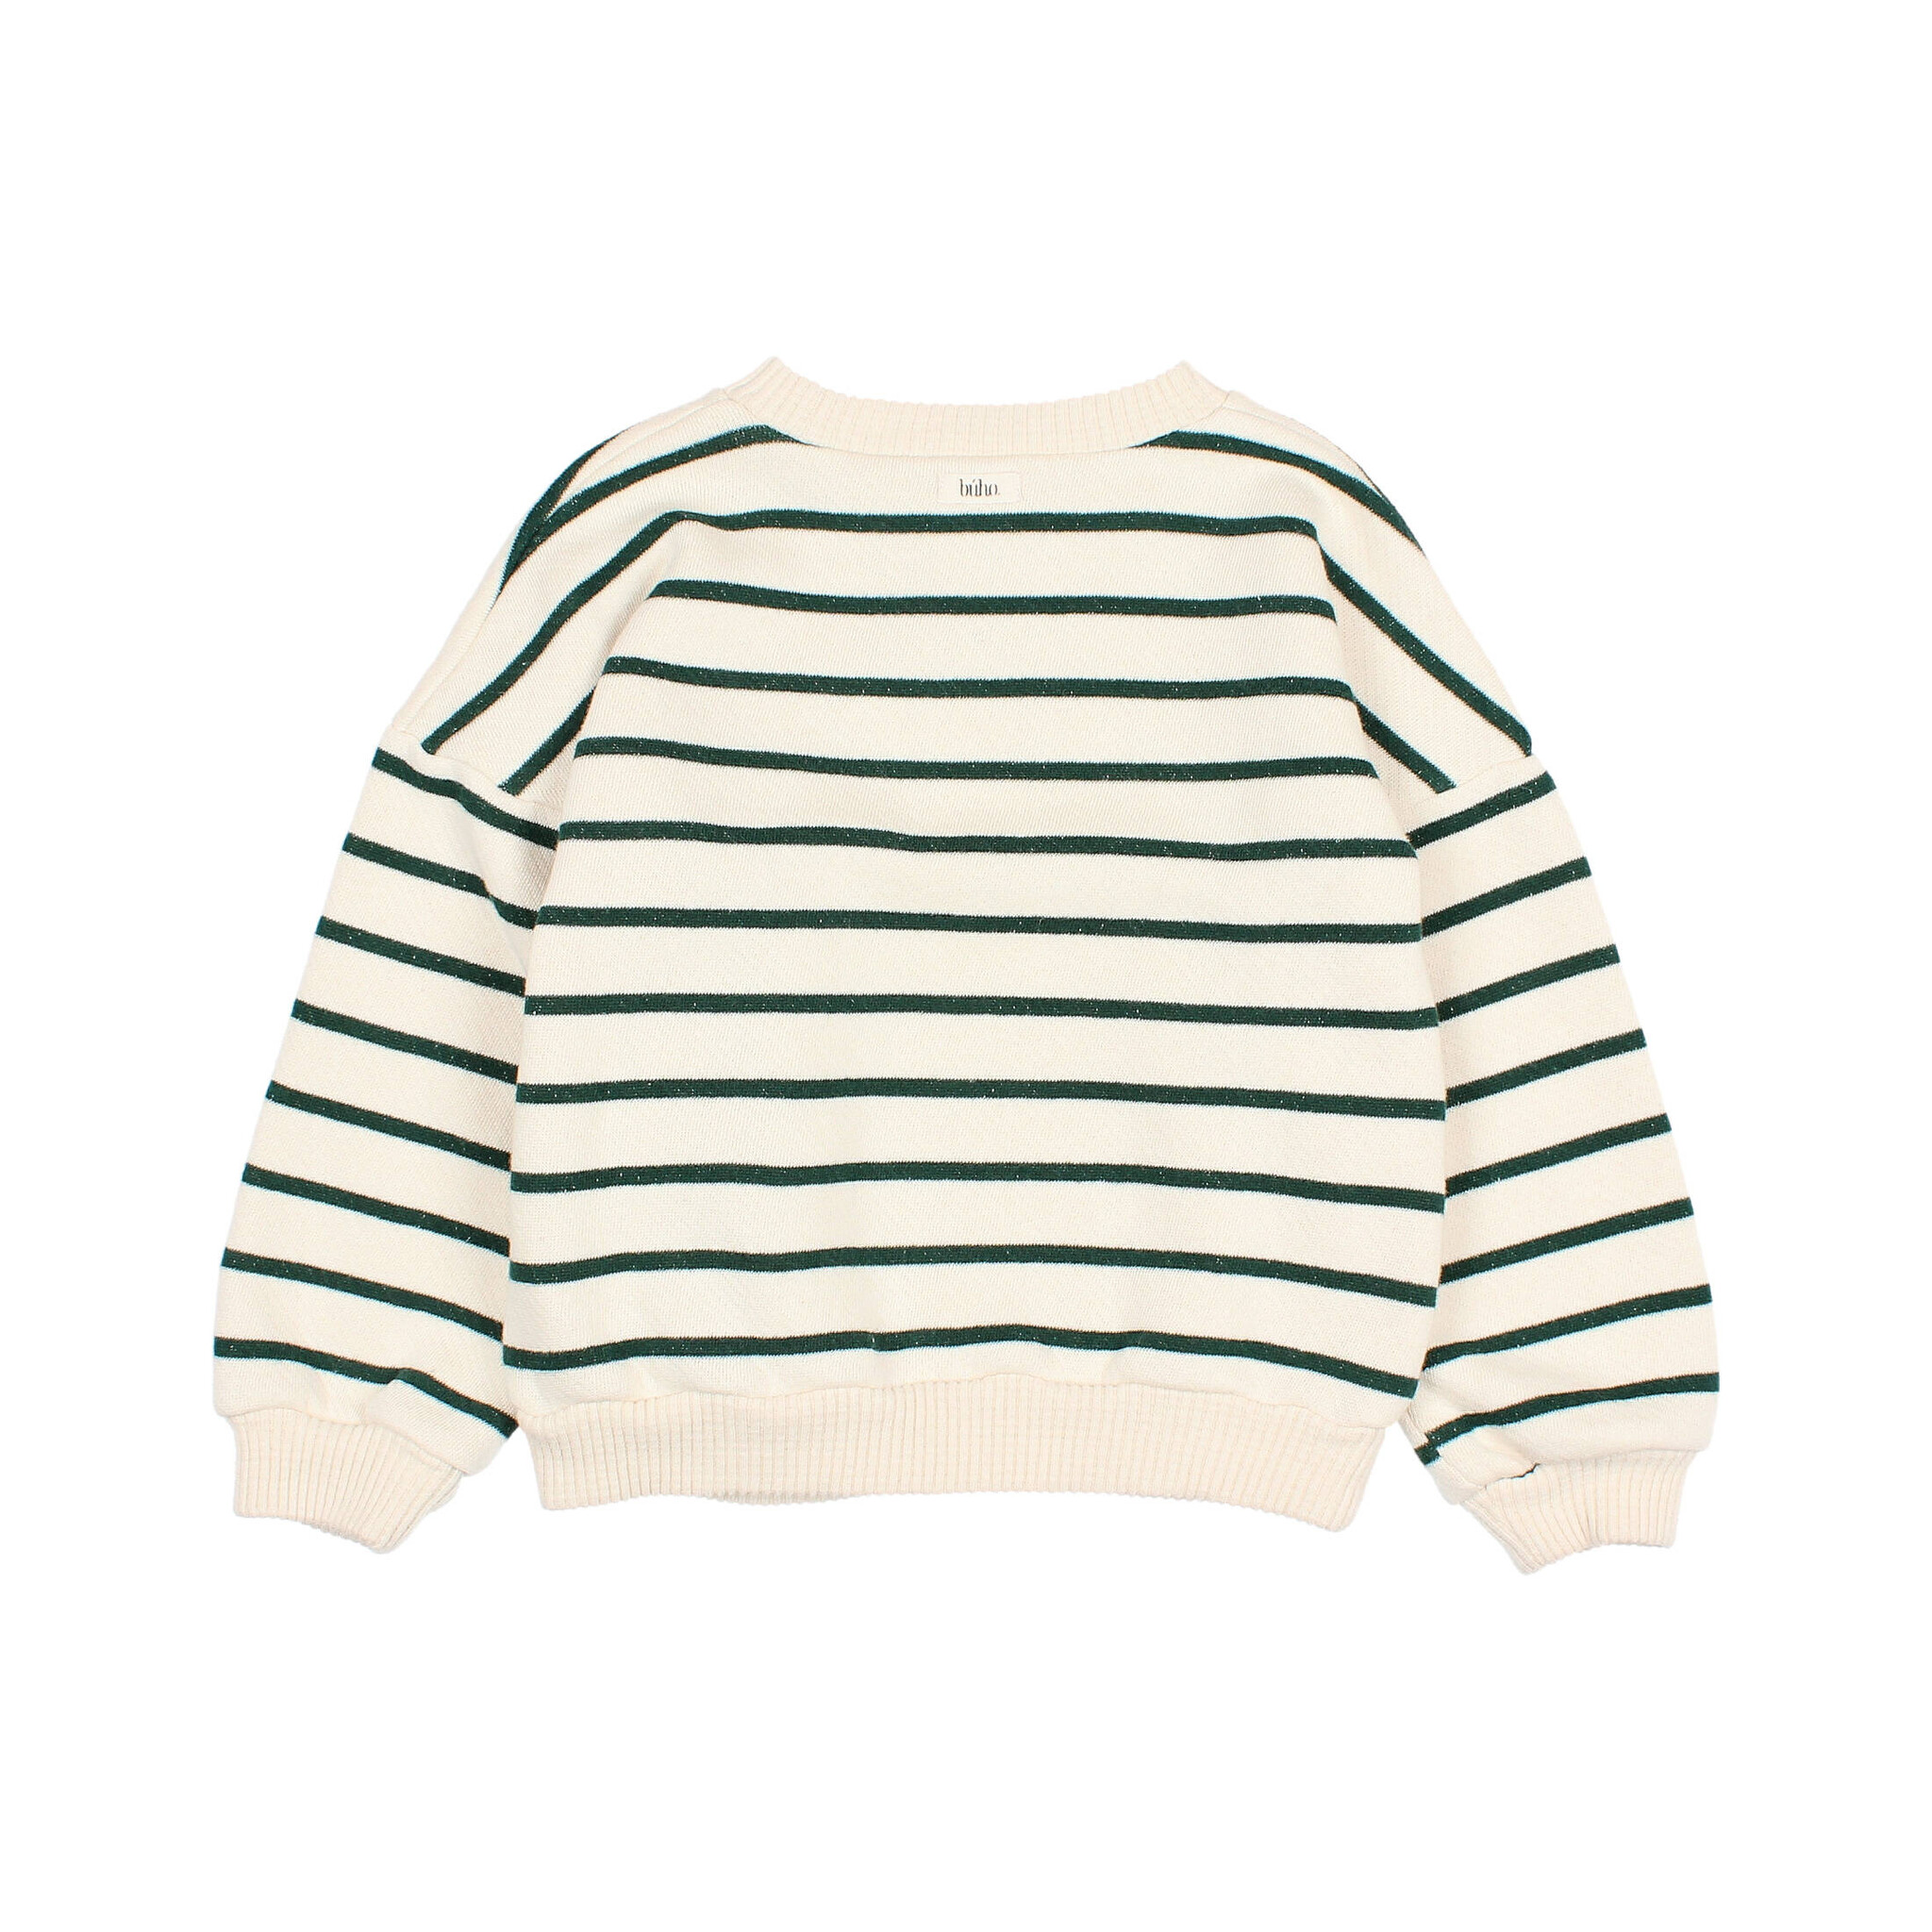 Stripes sweatshirt ecru-green 7433-2